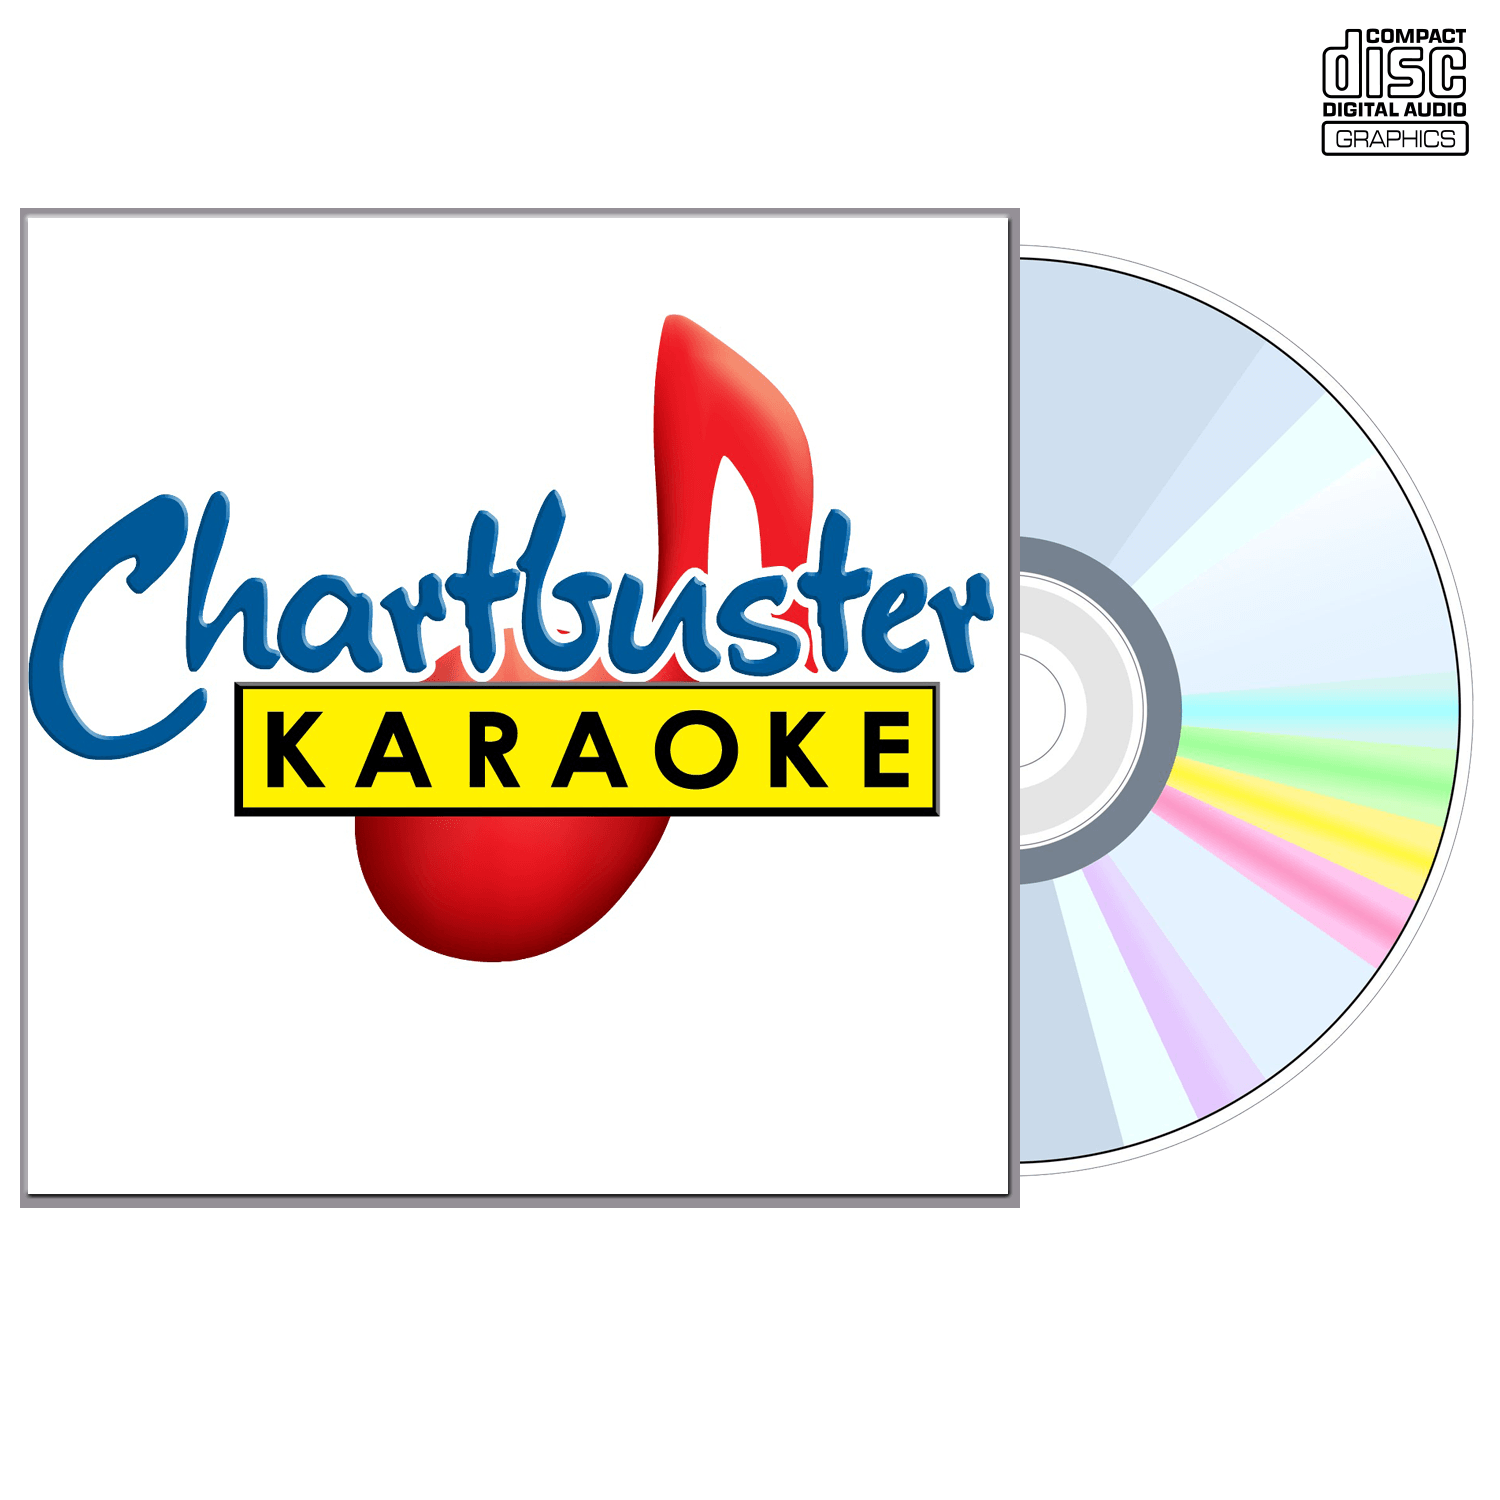 Sounds Of Sixties Vol 03 - CD+G - Chartbuster Karaoke - Karaoke Home Entertainment